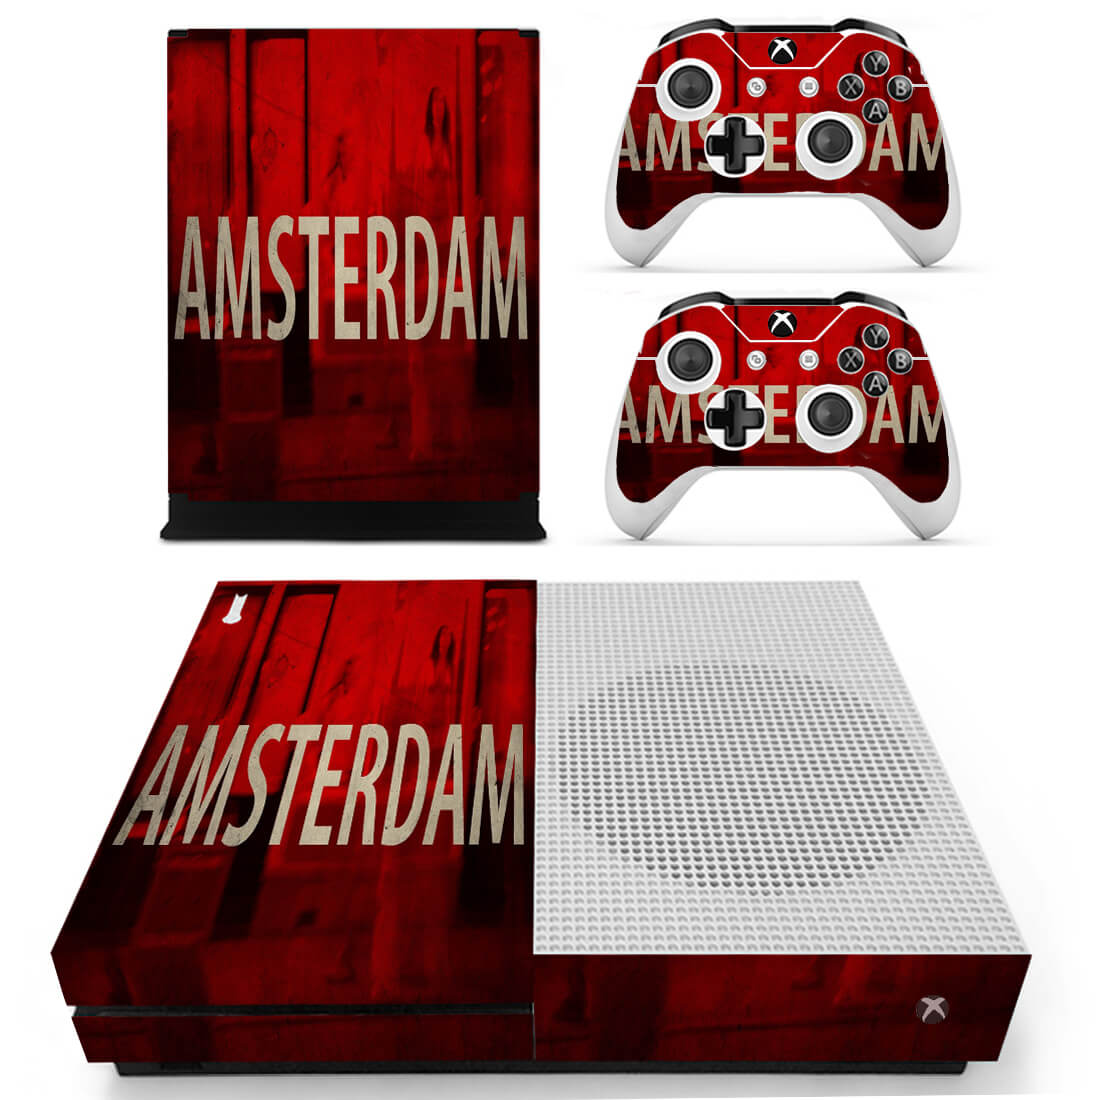 Amsterdam Xbox One S skin